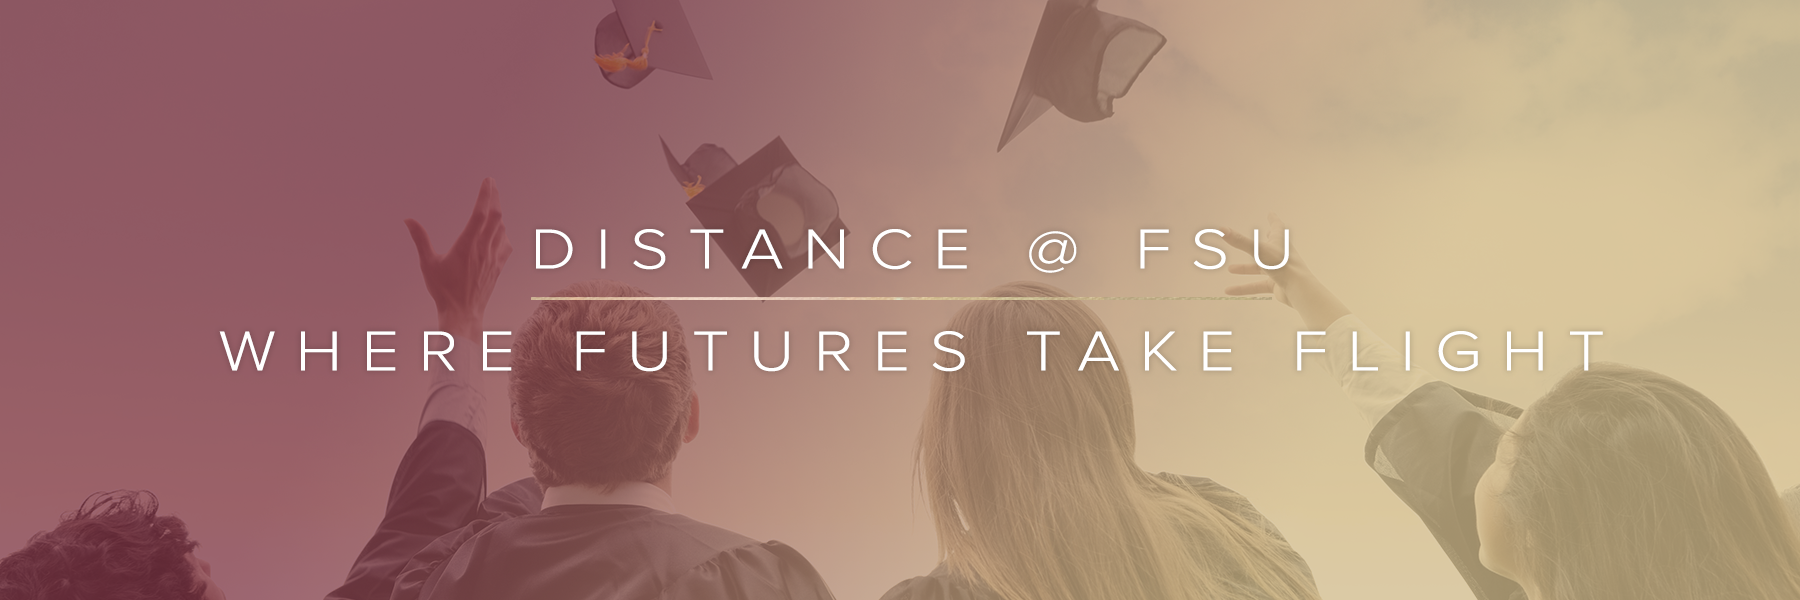 Distance at FSU - where futures take flight